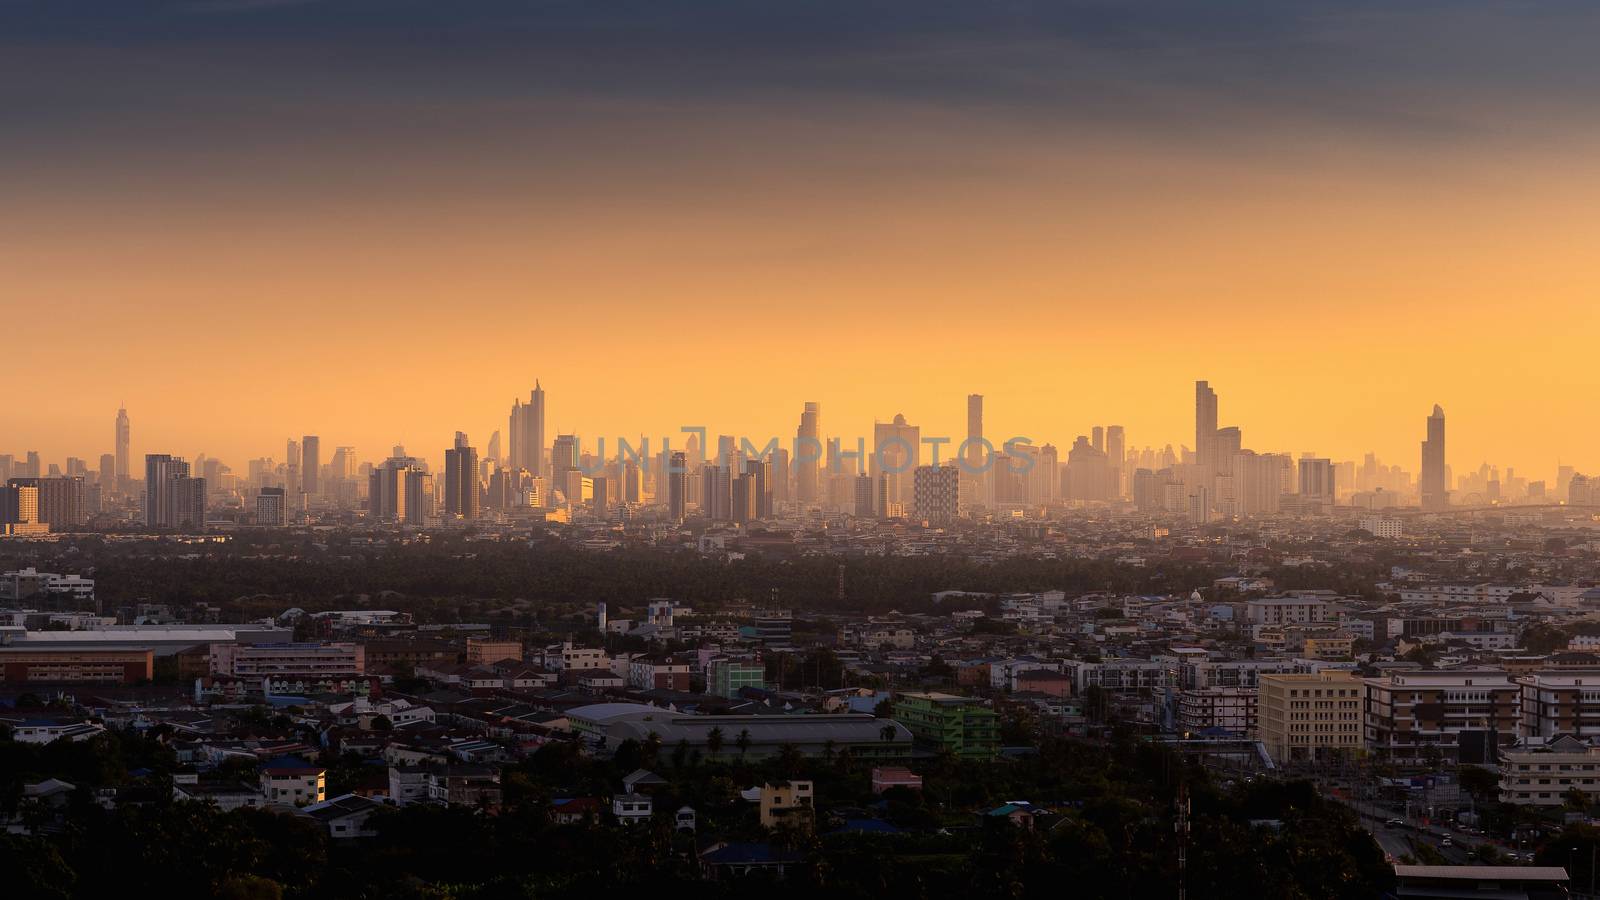 Bangkok city at sunrise, Thailand. by gutarphotoghaphy